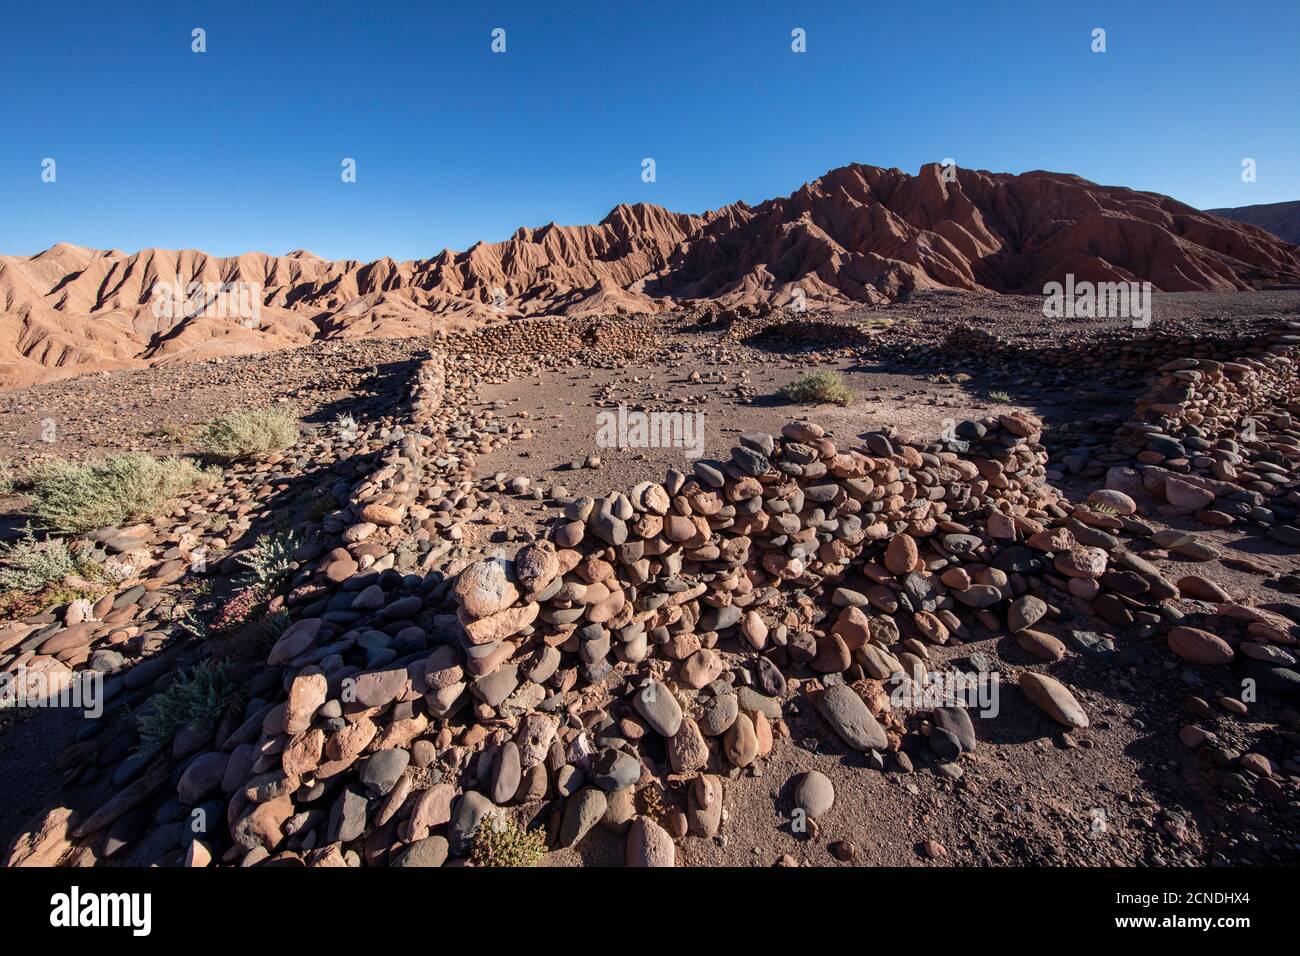 Remnants of rock structures in Tambo de Catarpe, Catarpe Valley in the Atacama Desert, Chile Stock Photo